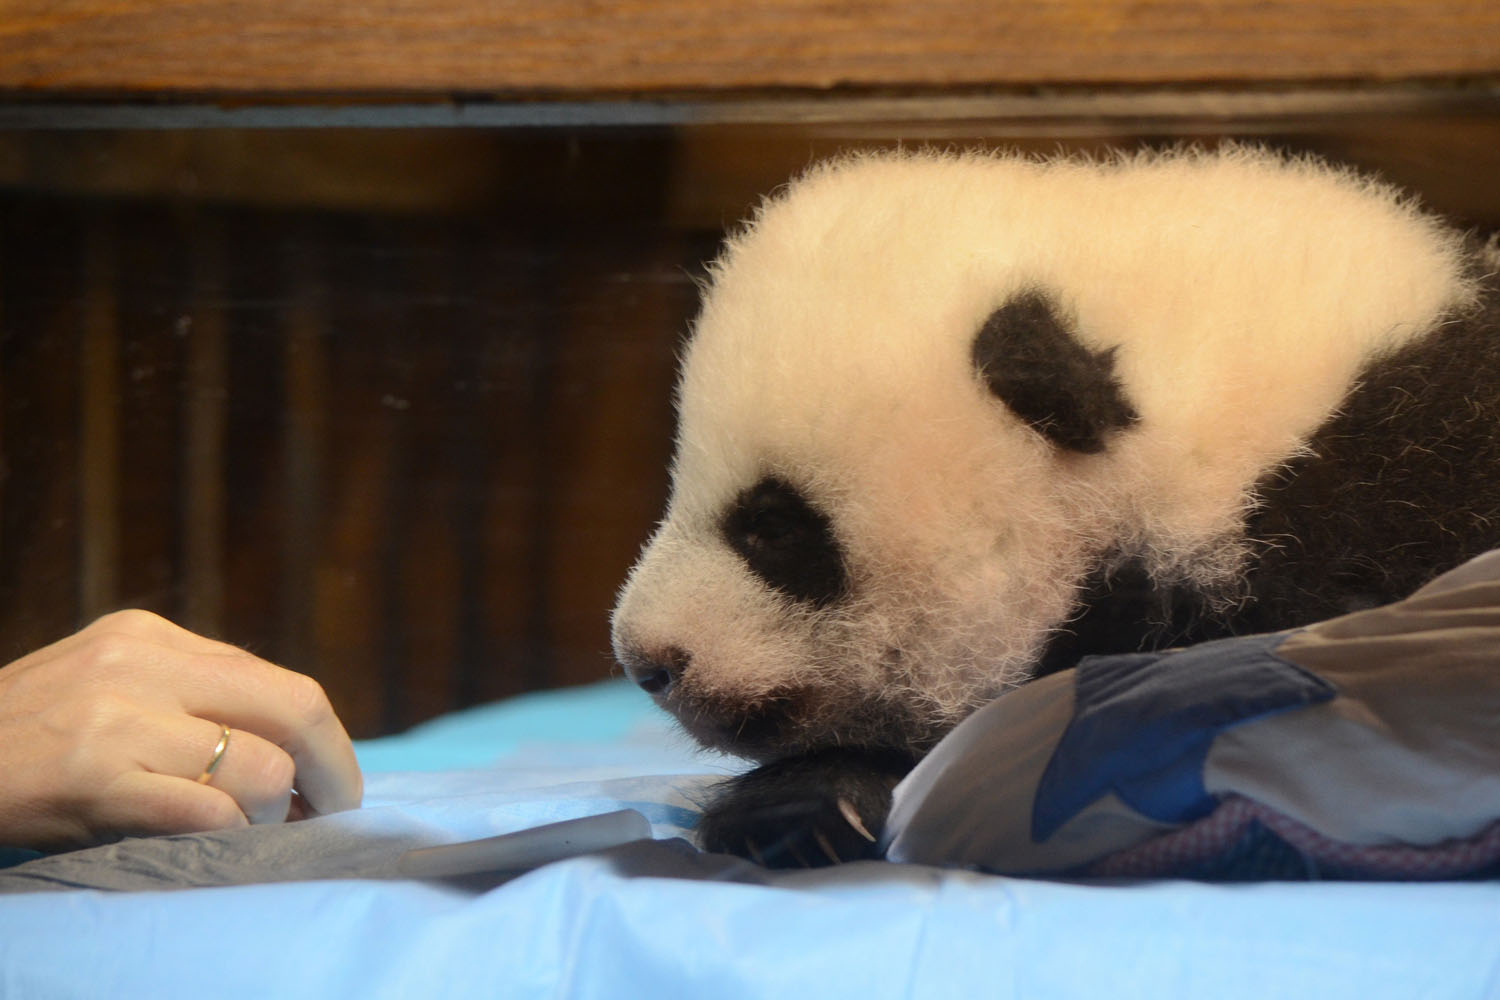 Madrid Zoo presents its fourth giant panda